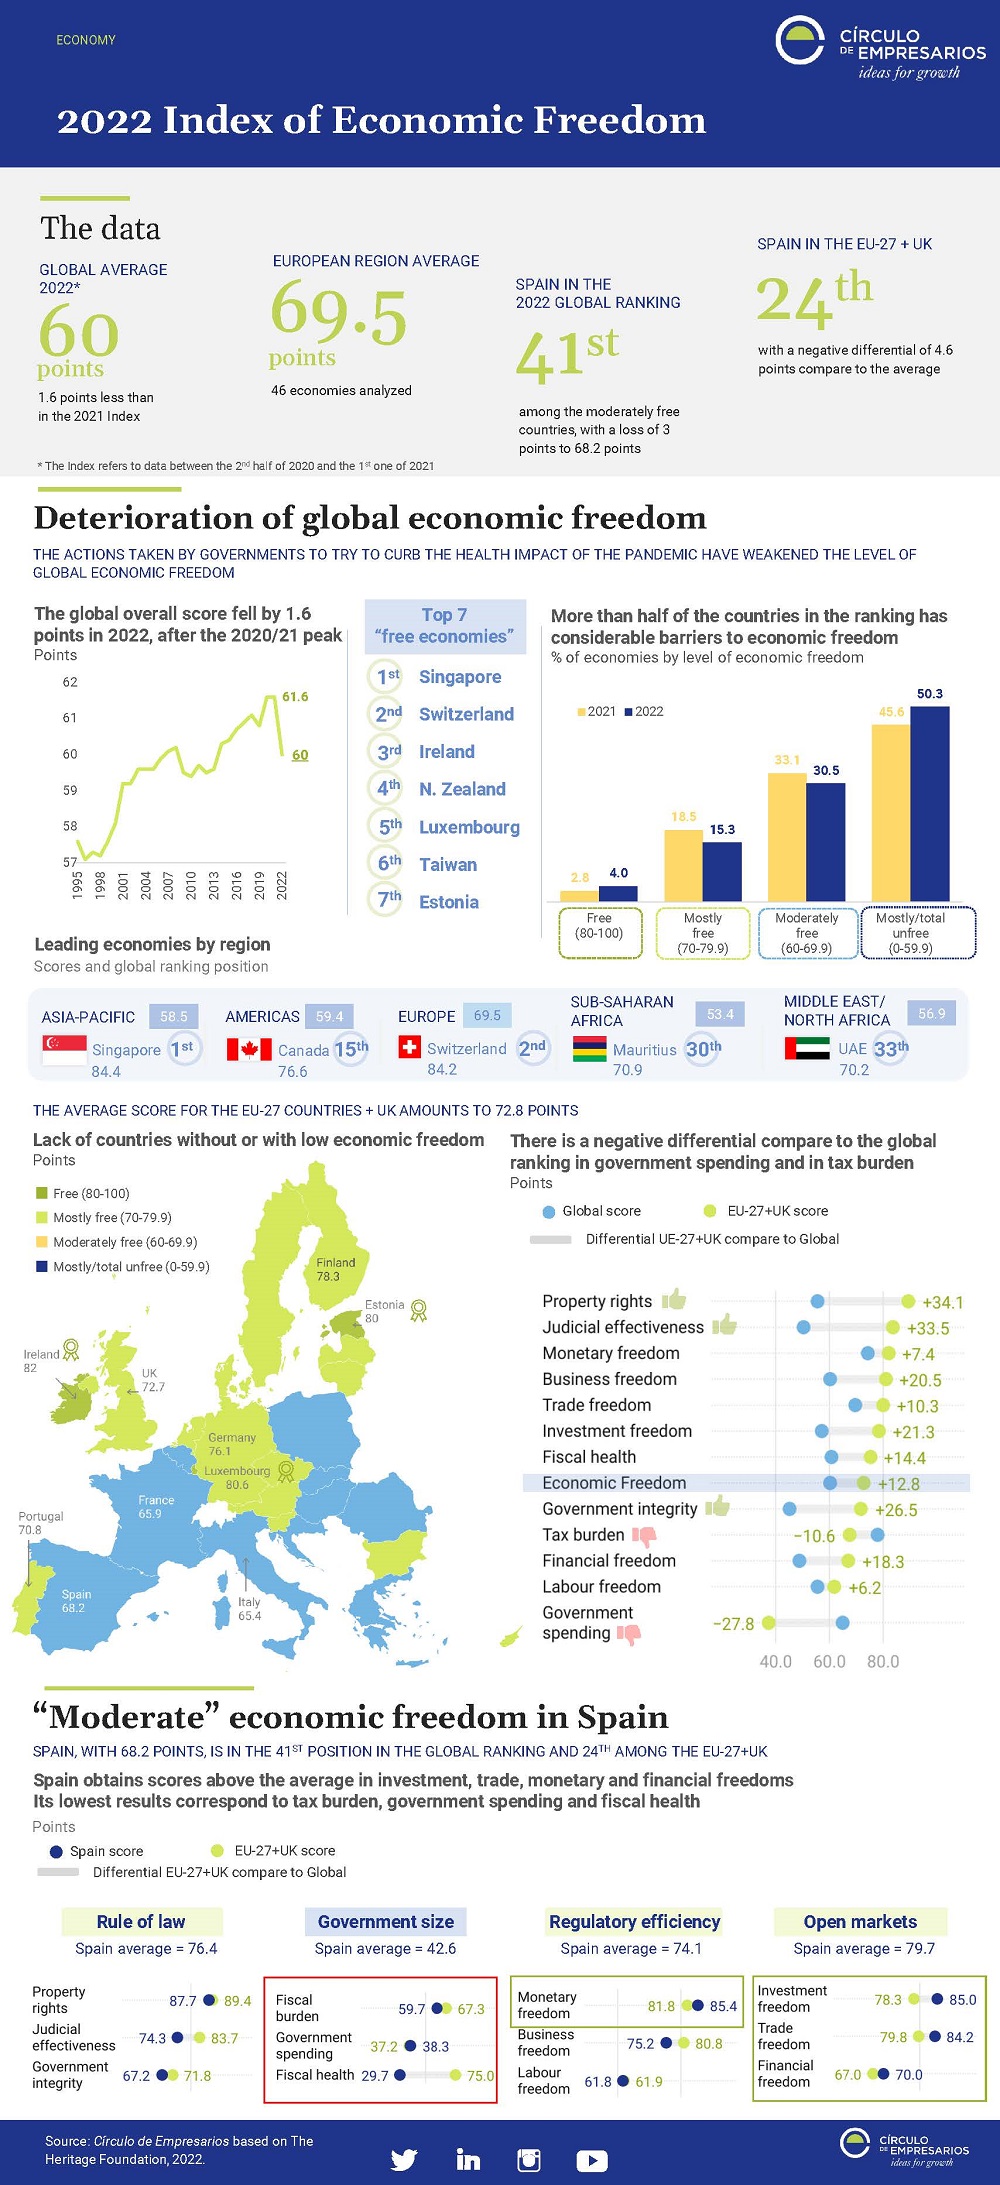 2022-Index-of-Economic-Freedom-Infographic-February-2022-Circulo-de-Empresarios